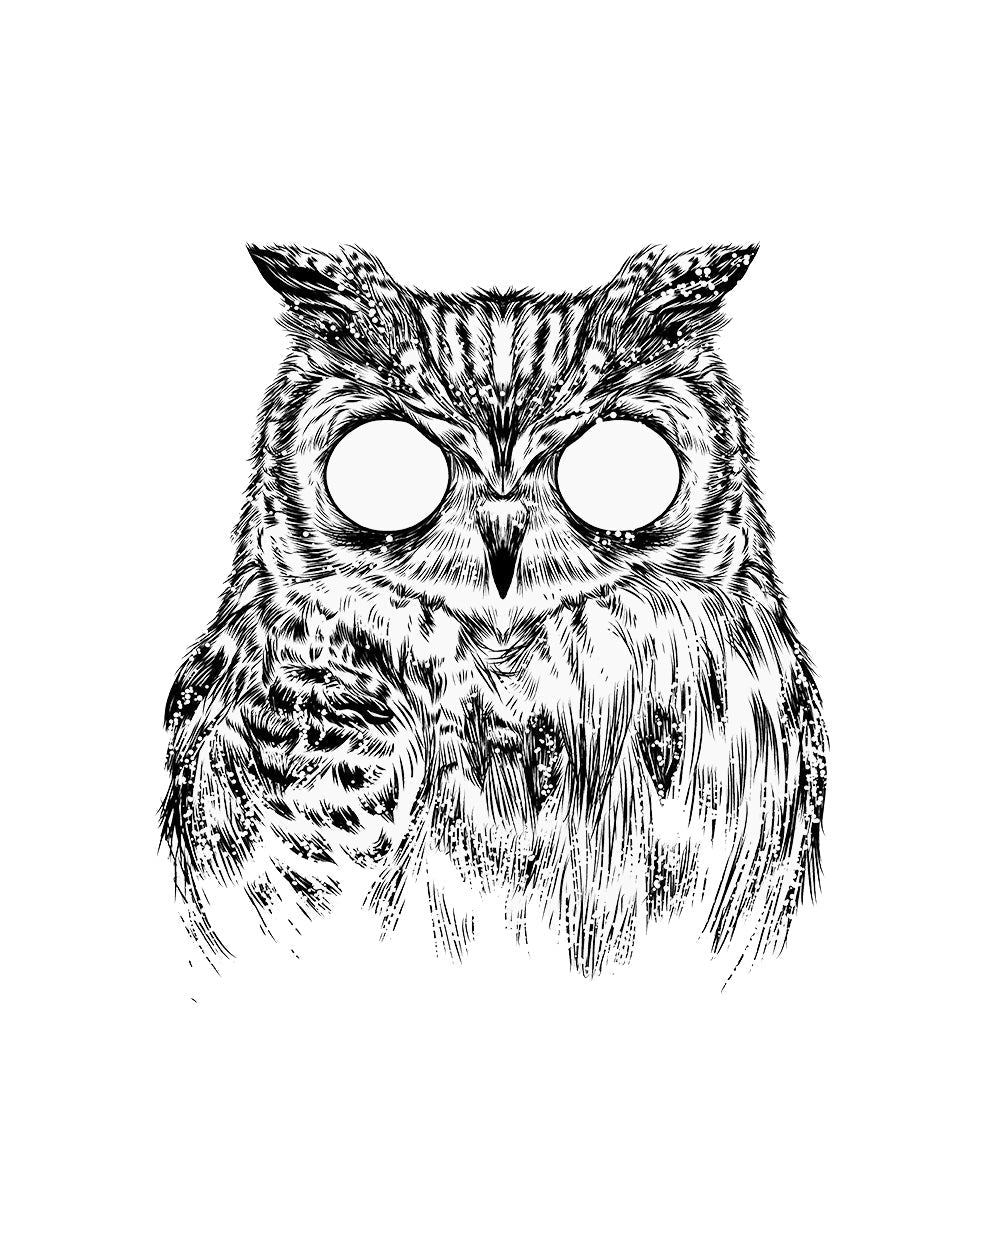 Owltical Illusion Owl Animal Cool Artsy Cotton T-Shirt